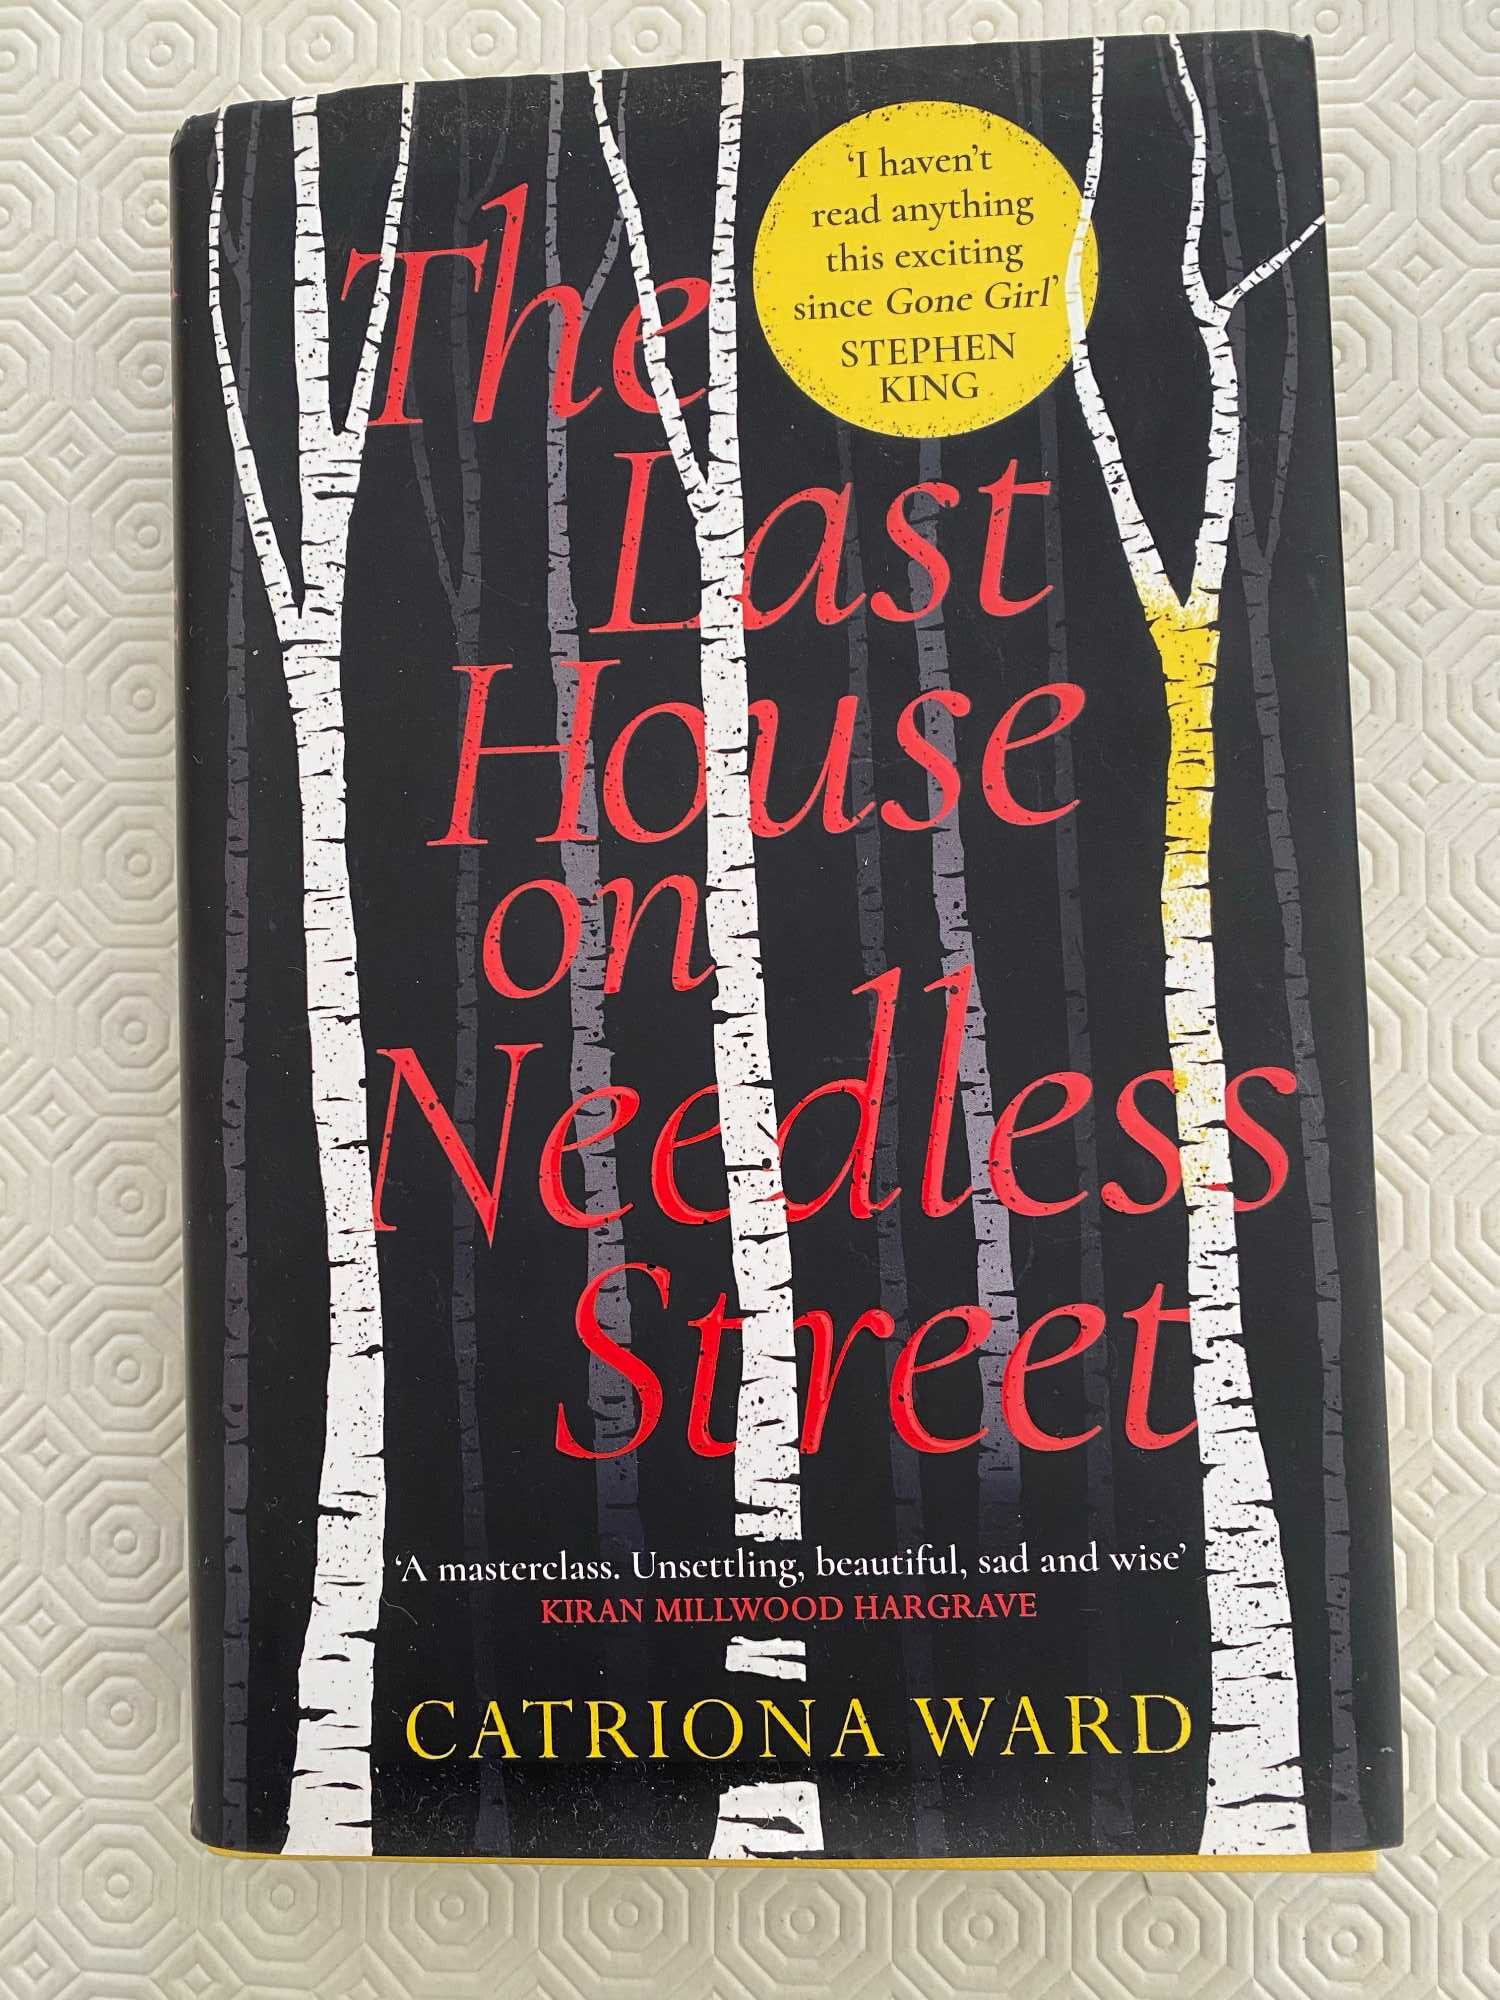 Catriona Ward - The Last House on Needless Street